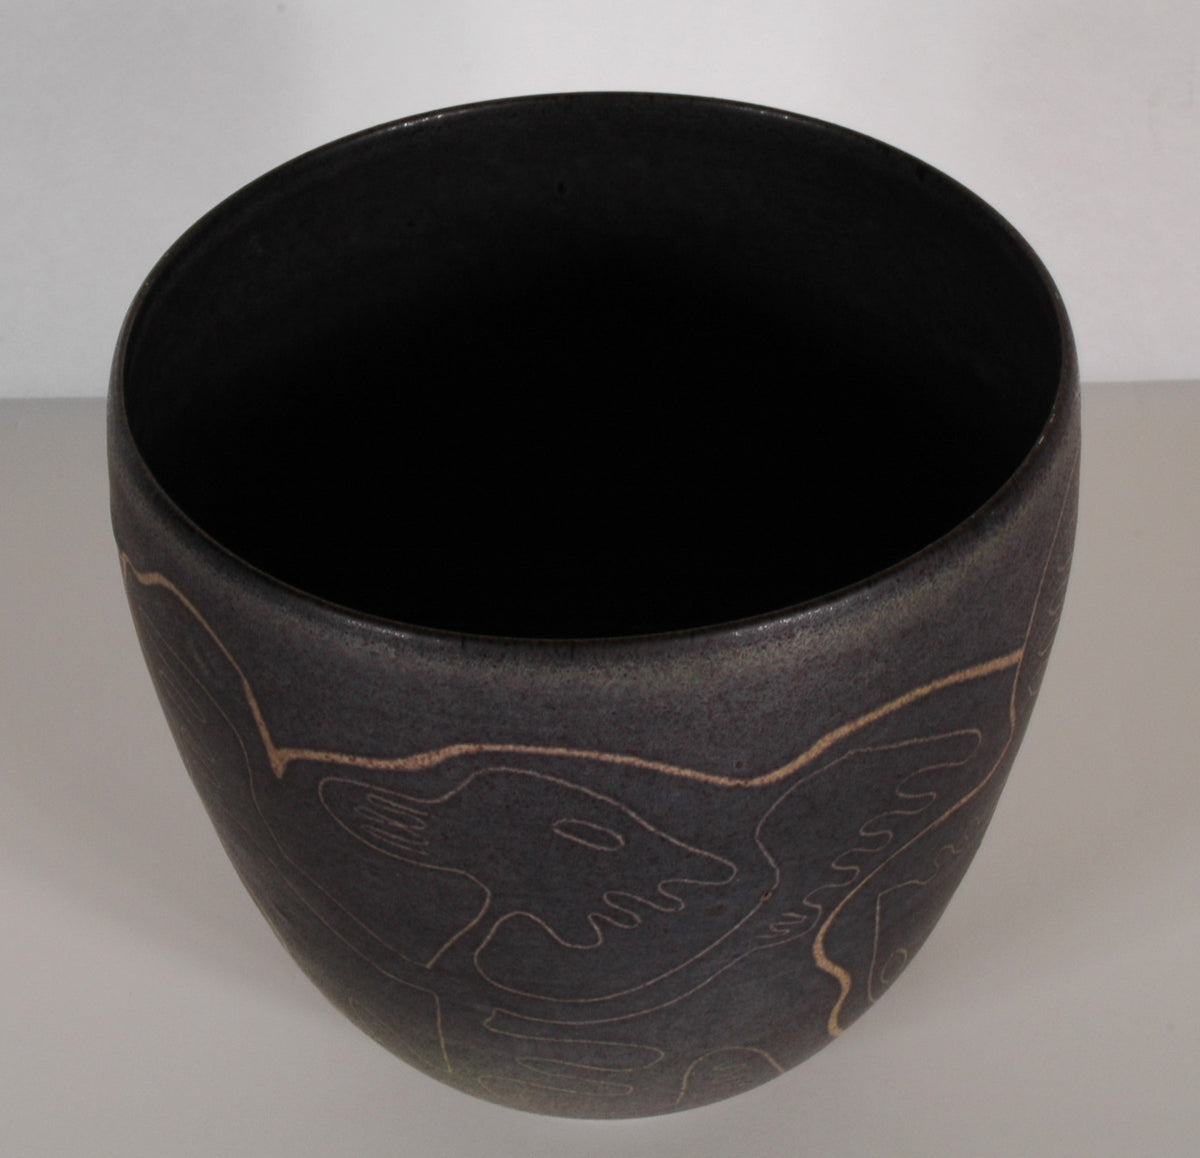 Edwin and Mary Scheier - Studio Pottery Vase